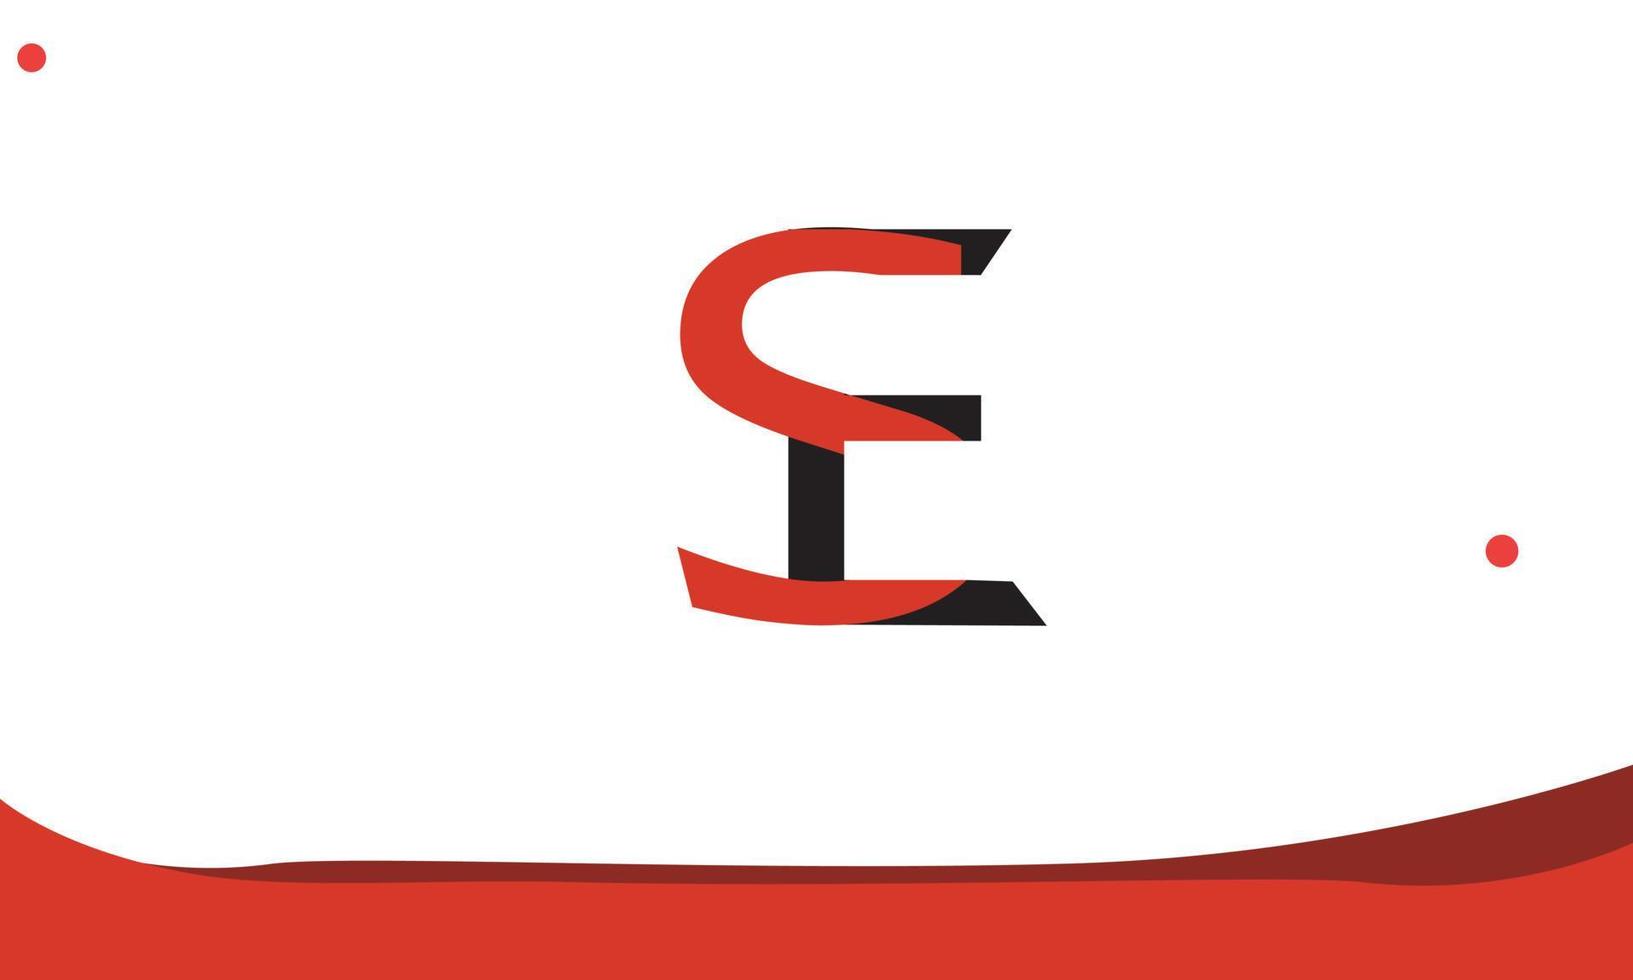 Alphabet letters Initials Monogram logo SE, ES, S and E vector